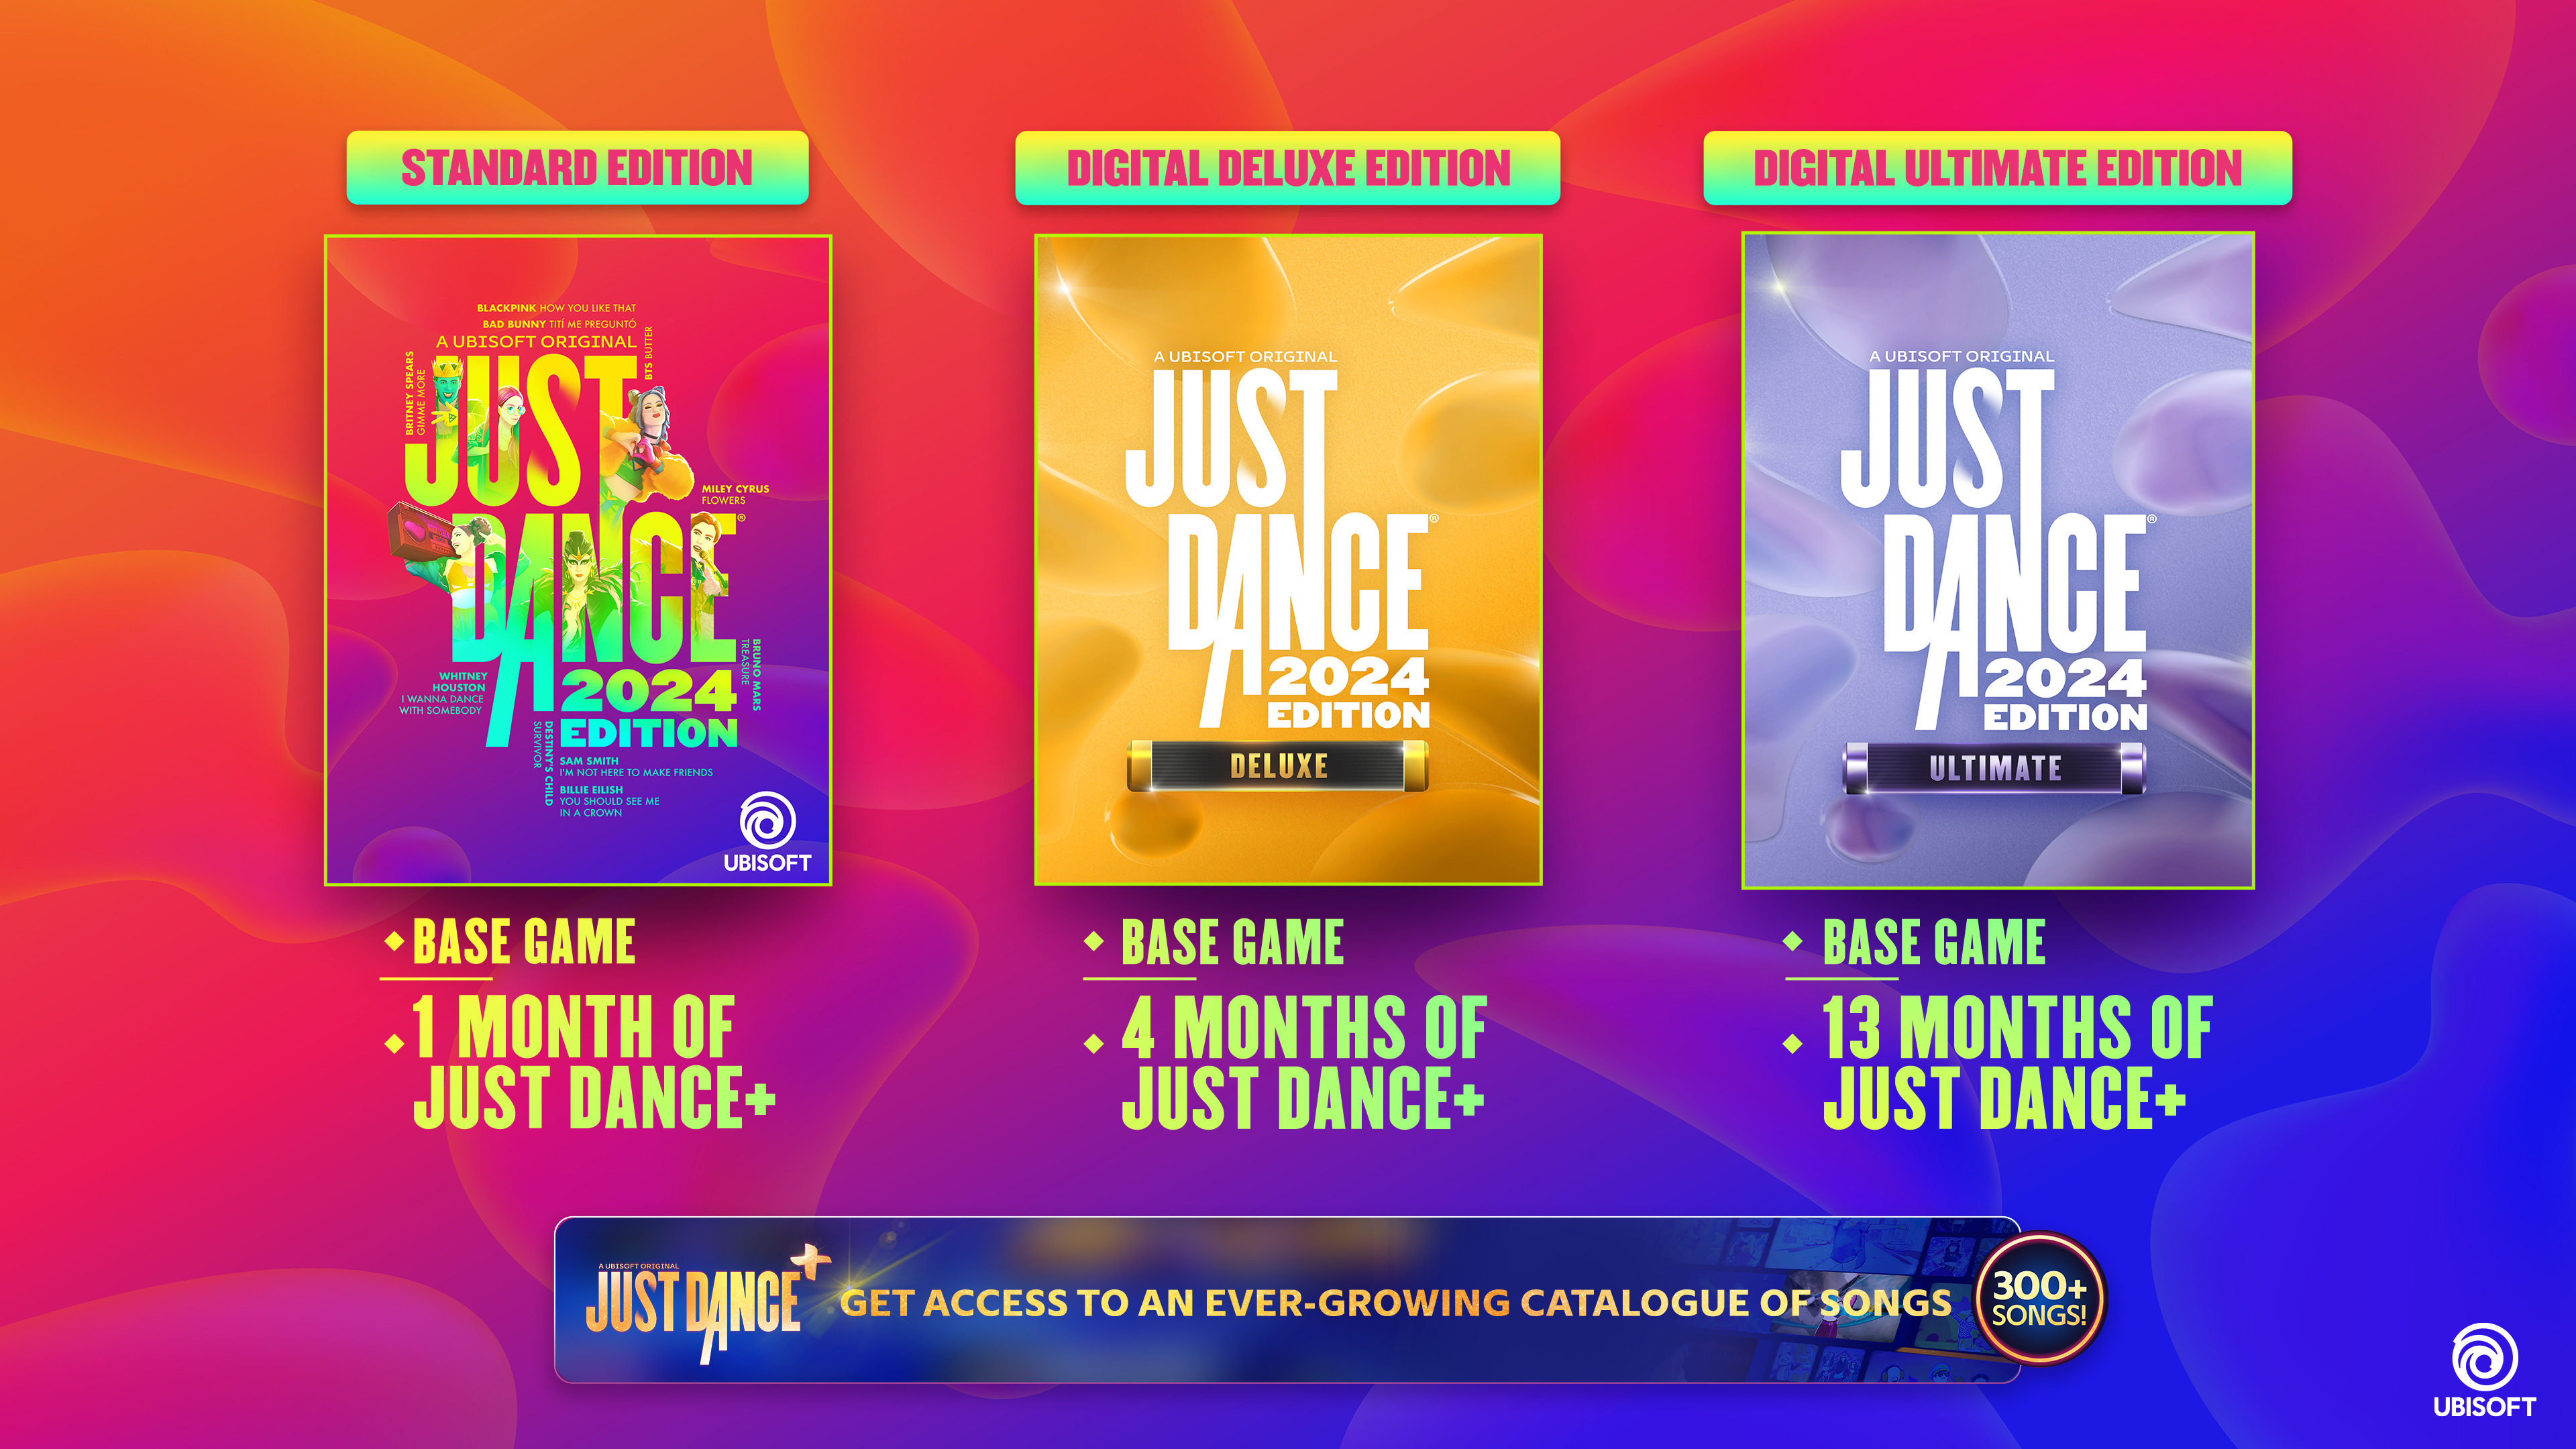 Игры подписки делюкс 2024. Just Dance 2024 Edition. Just Dance 2024 Deluxe Edition Xbox. Логотип just Dane 2024 Edition. Делюкс 2024.